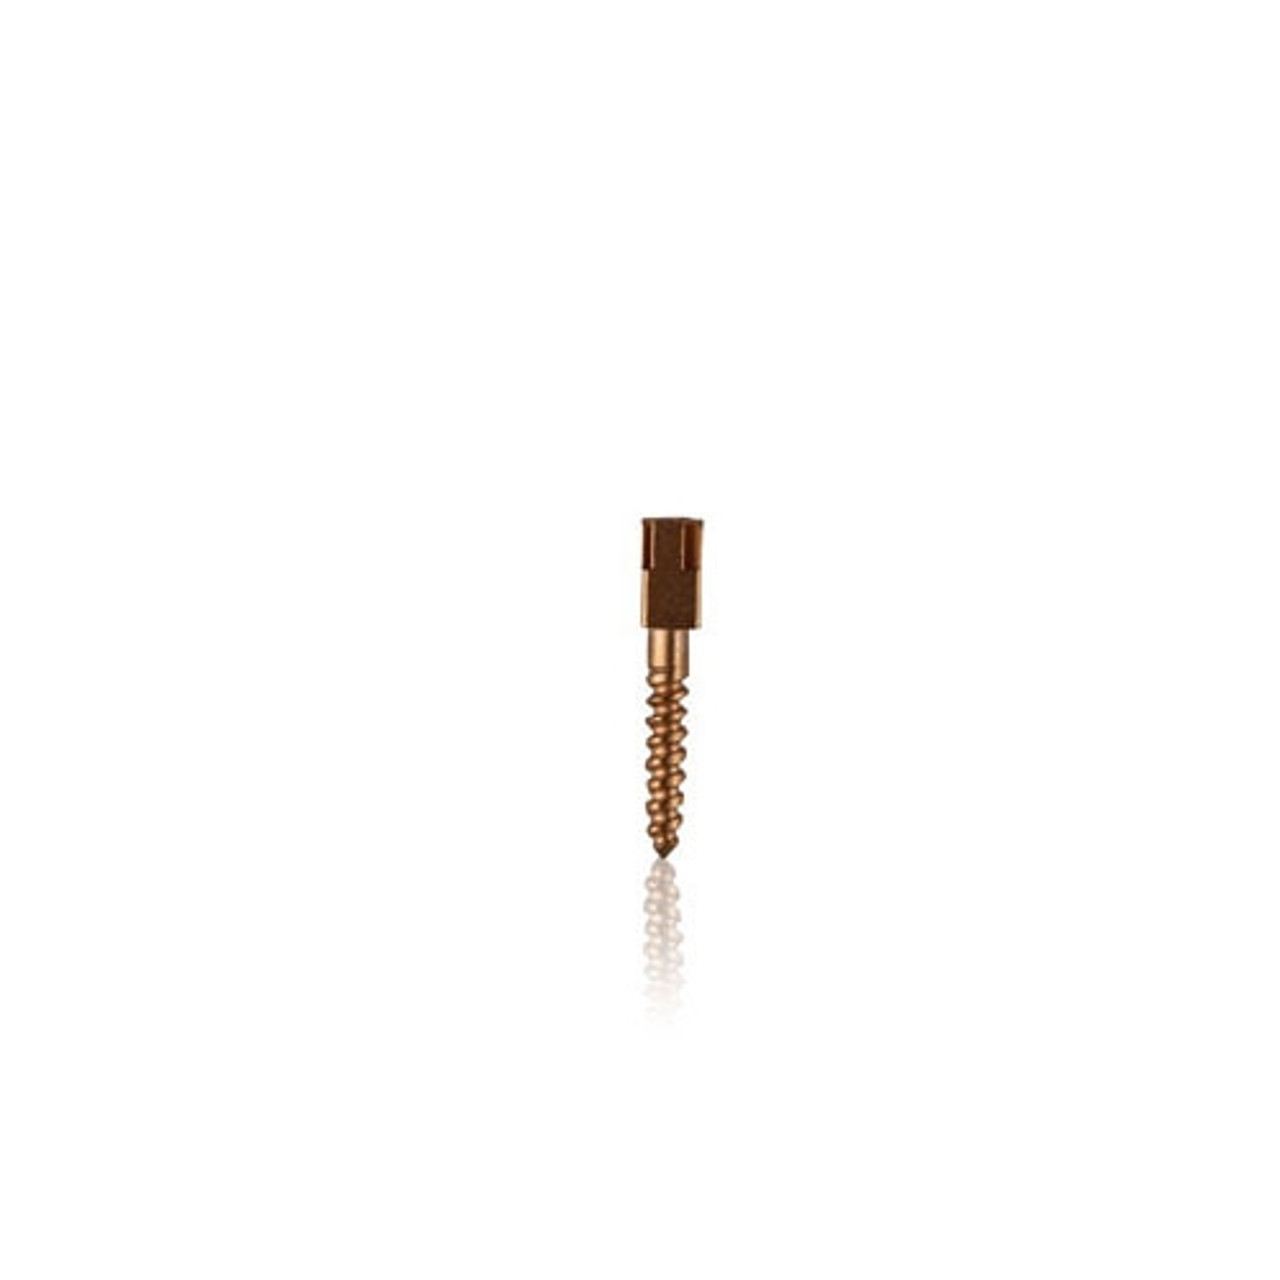 Johnson-Promident Gold Screw Post Size 6 Long 1.50x11.8mm, 12/pk